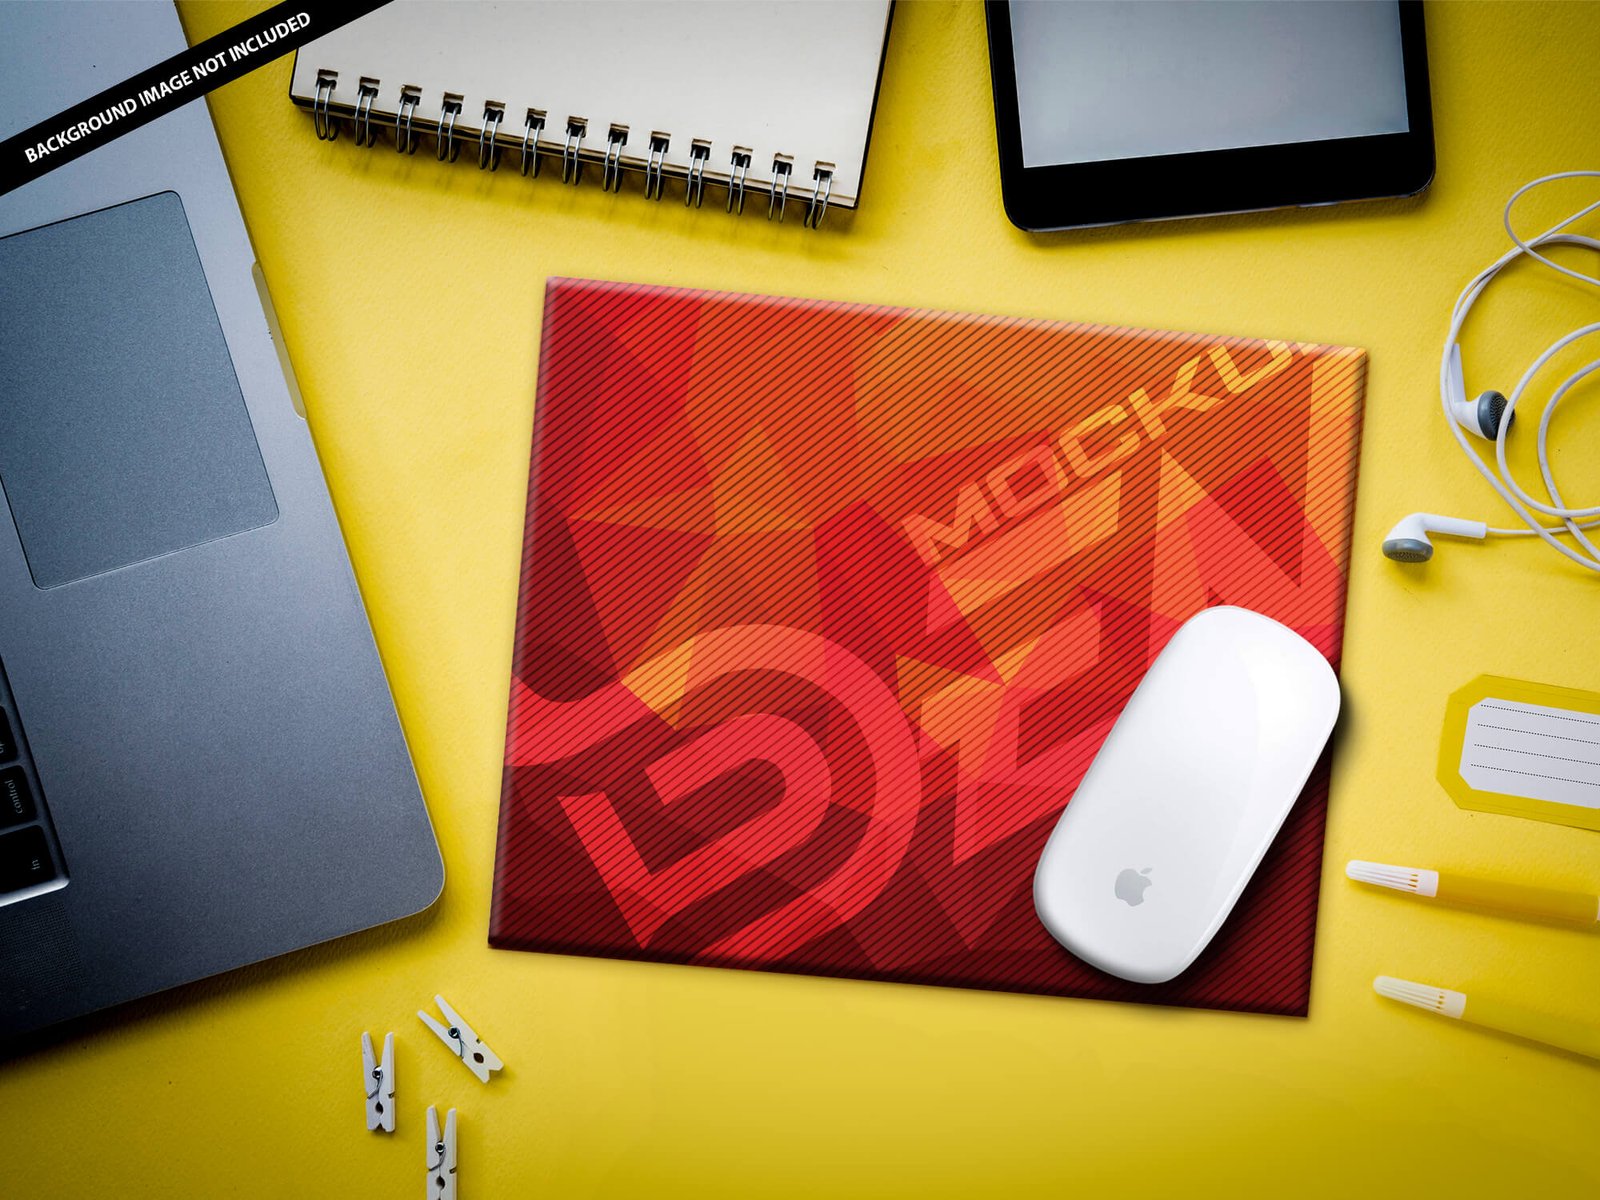 Download 25+ Best FREE Mouse Pad Mockup PSD Templates - Mockup Den